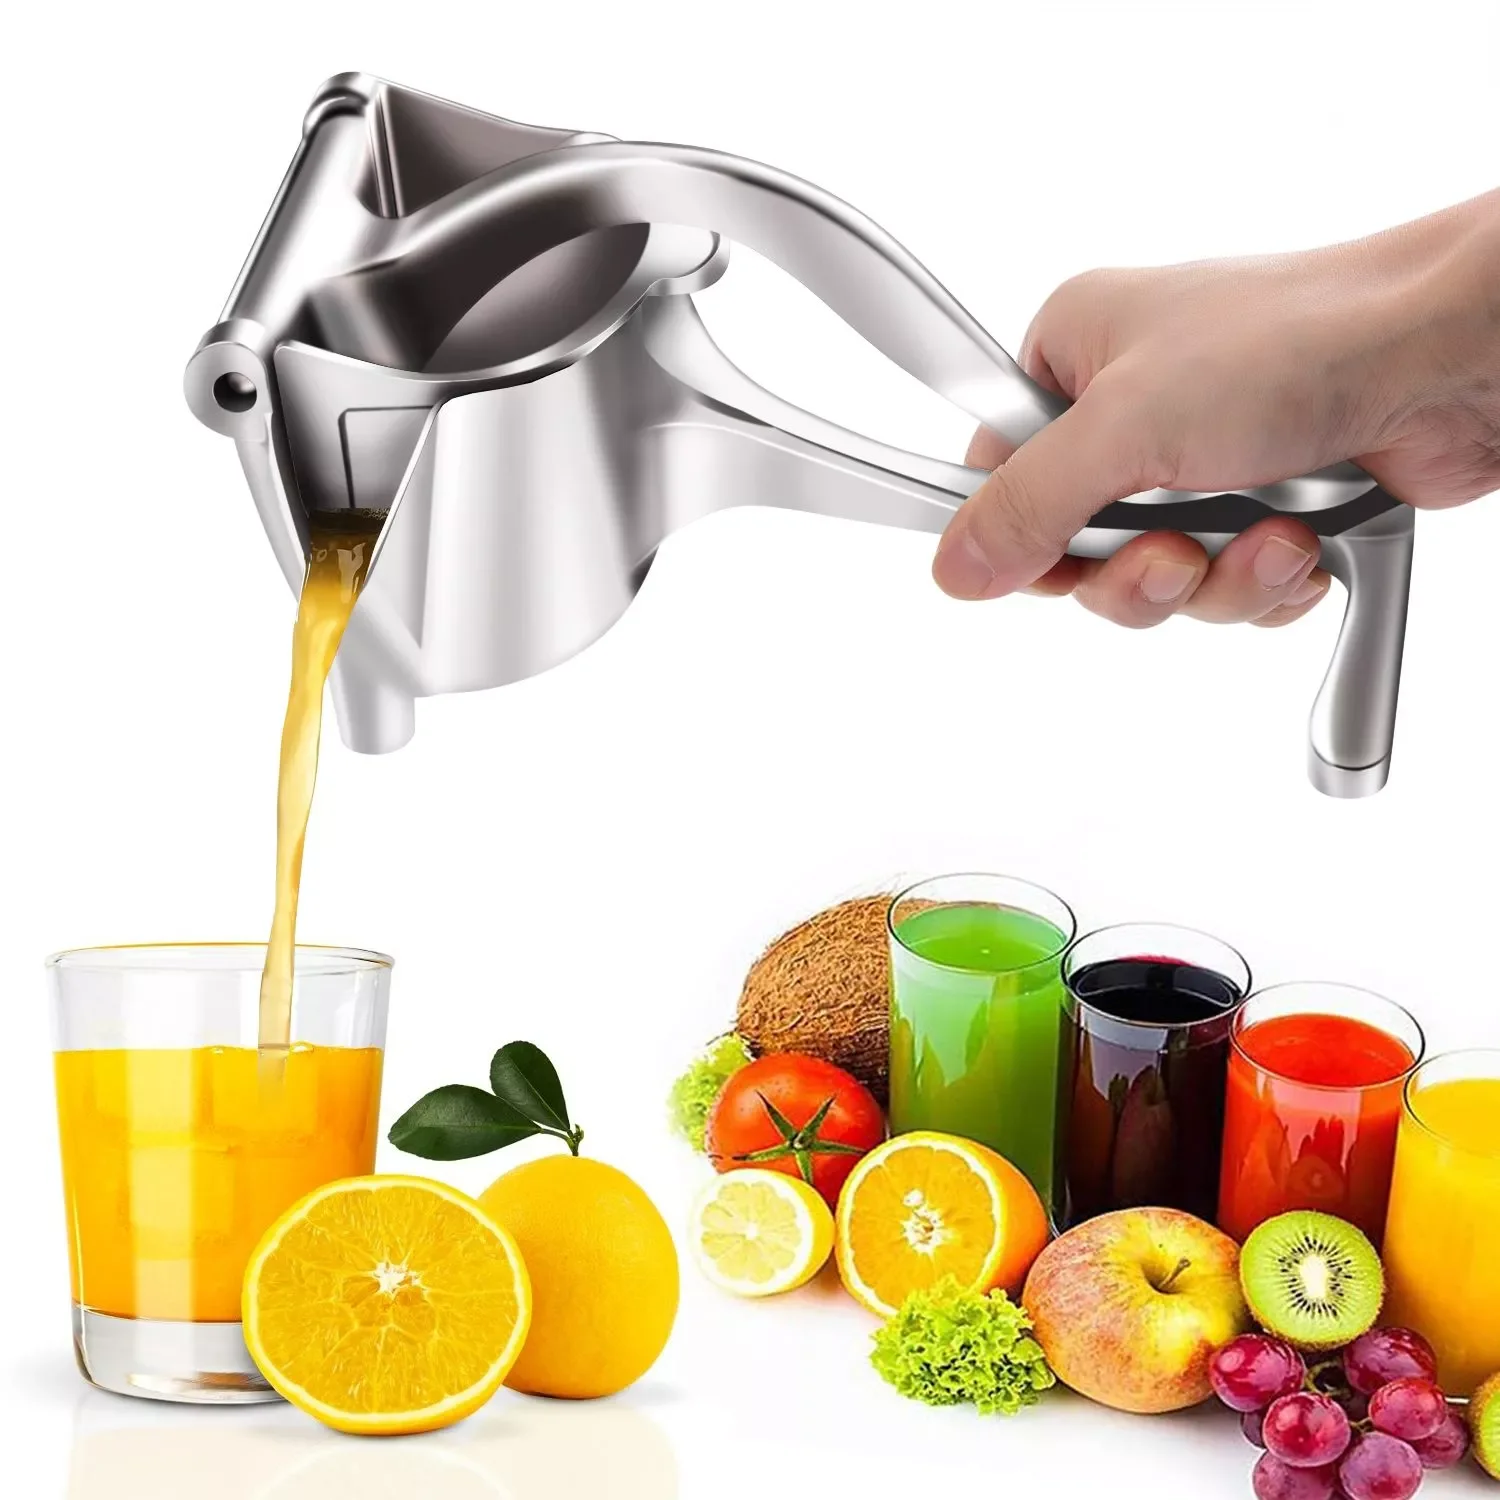 

2set/3set/6set Manual Juice Squeezer Aluminum Alloy Hand Pressure Orange Juicer Pomegranate Lemon Squeezer Kitchen Accessories